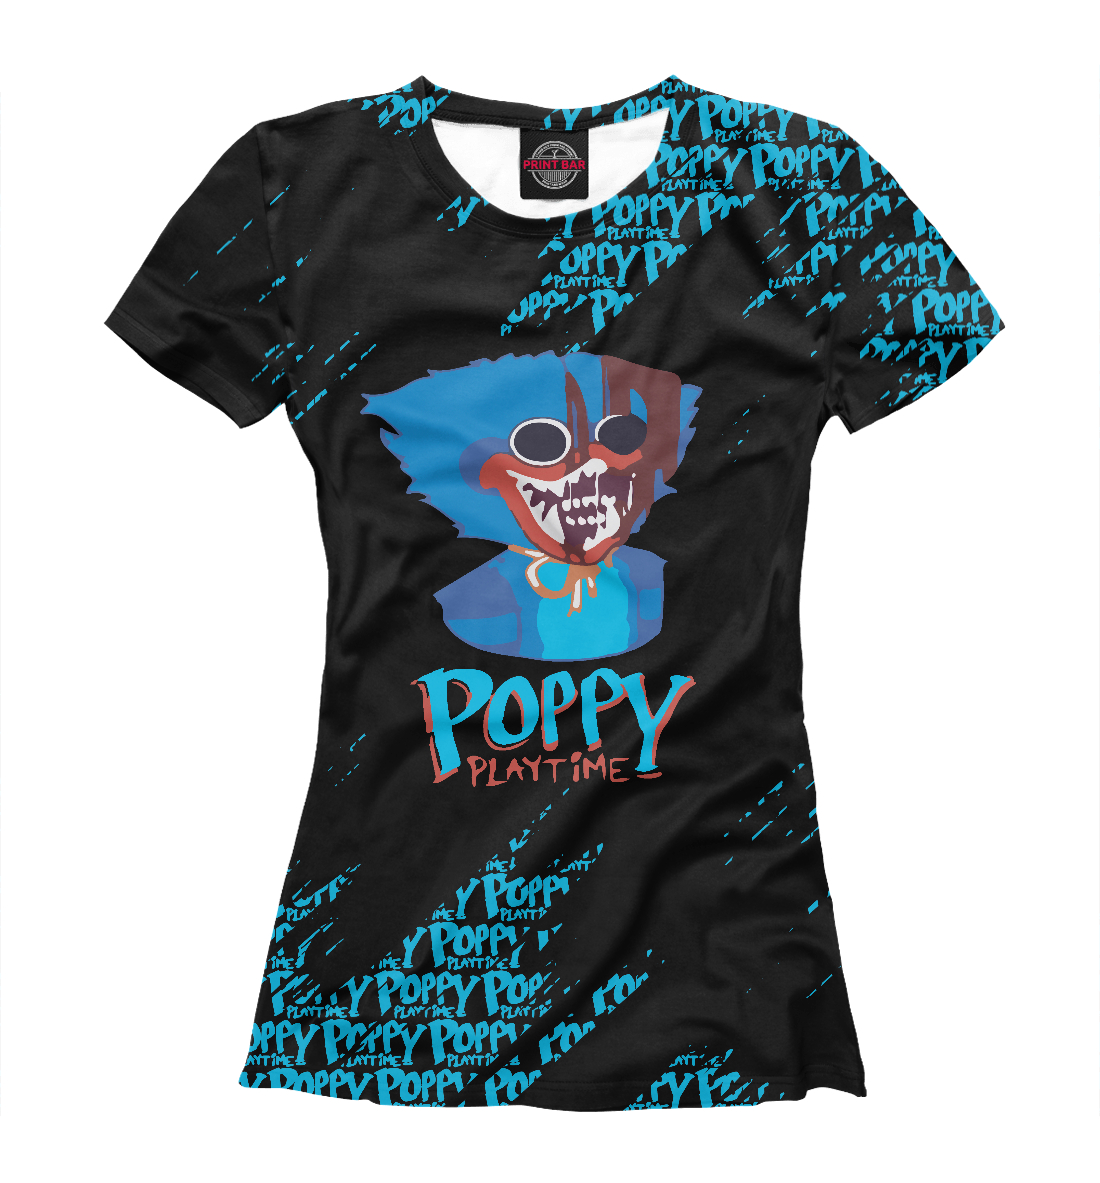 Футболка Poppy Playtime для женщин, артикул: PPE-206798-fut-1mp